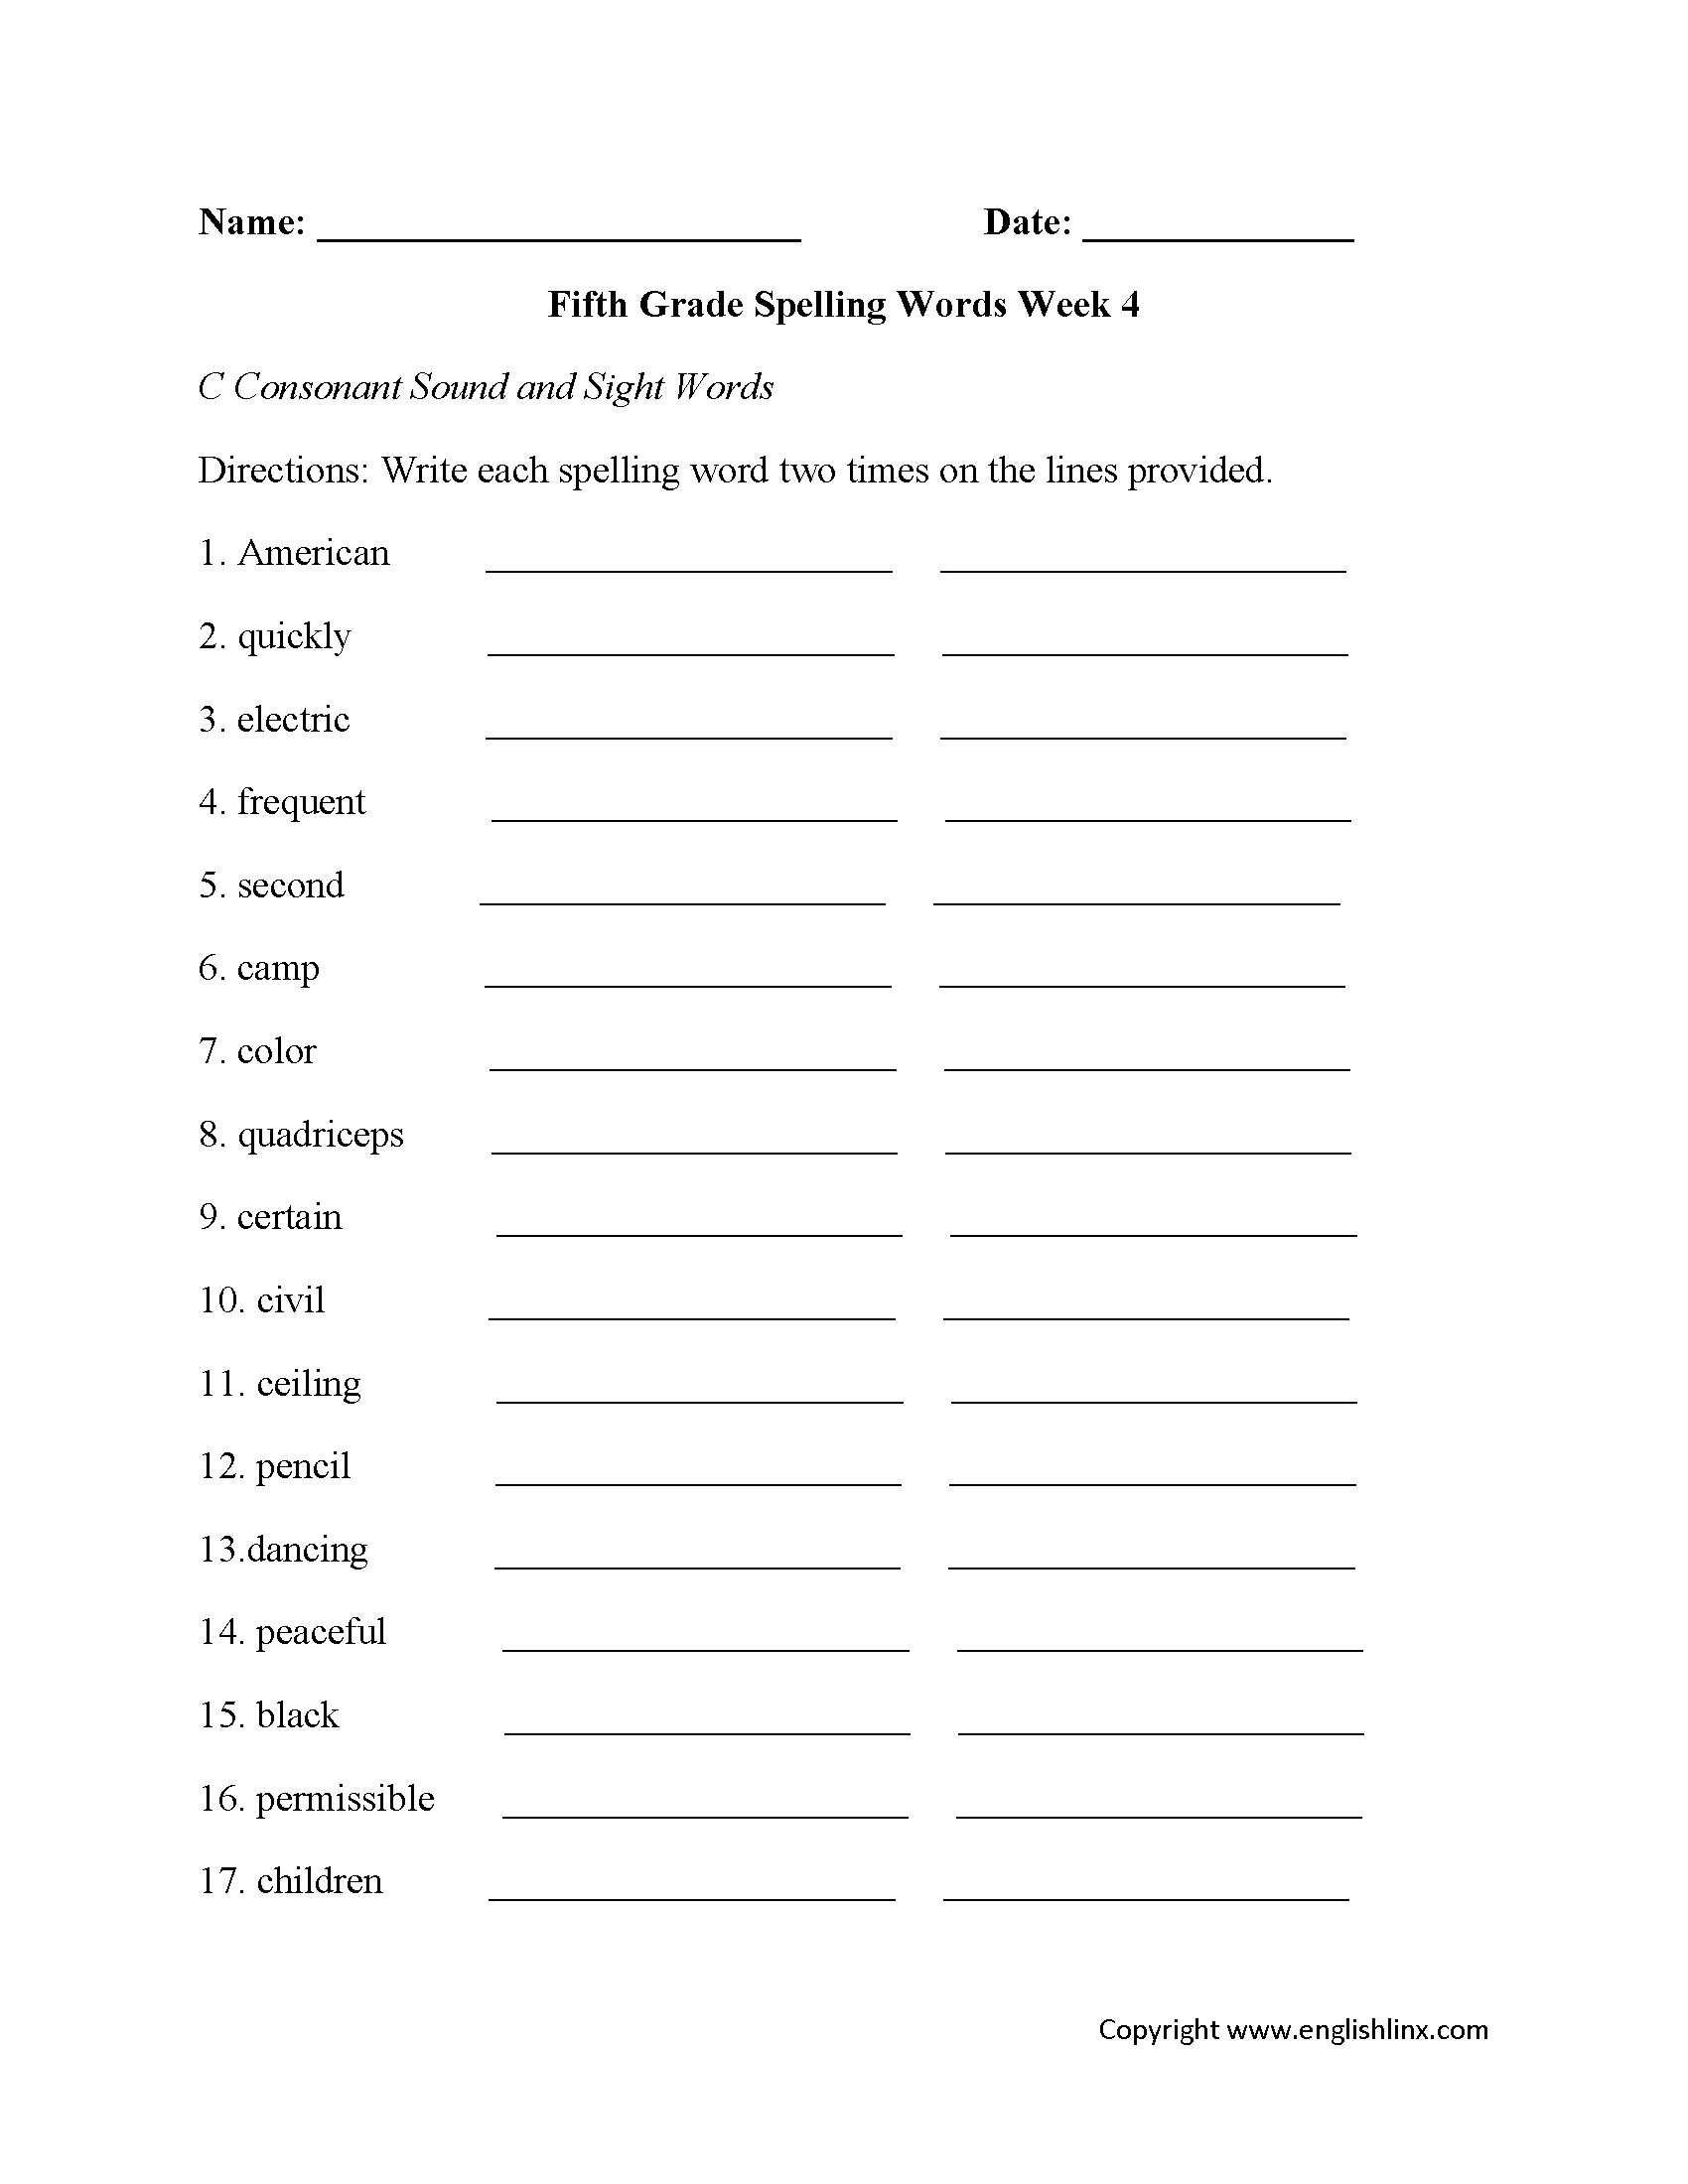 Spelling Worksheets | Fifth Grade Spelling Worksheets - Free Printable Worksheets For 5Th Grade